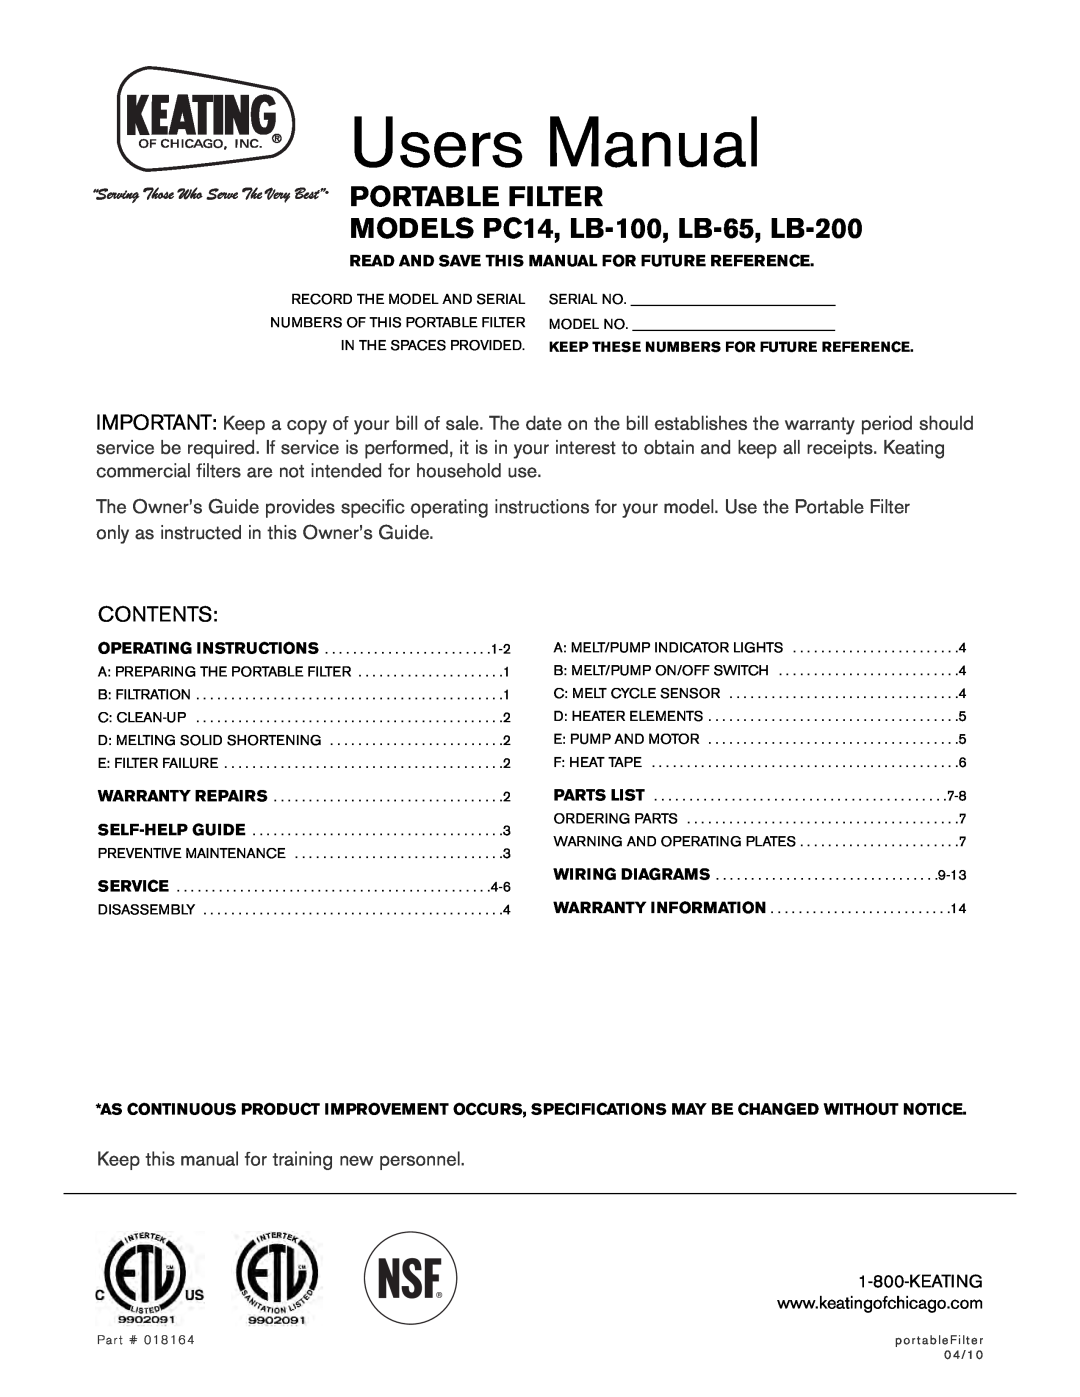 Keating Of Chicago user manual Portable Filter, MODELS PC14, LB-100, LB-65, LB-200, Contents 